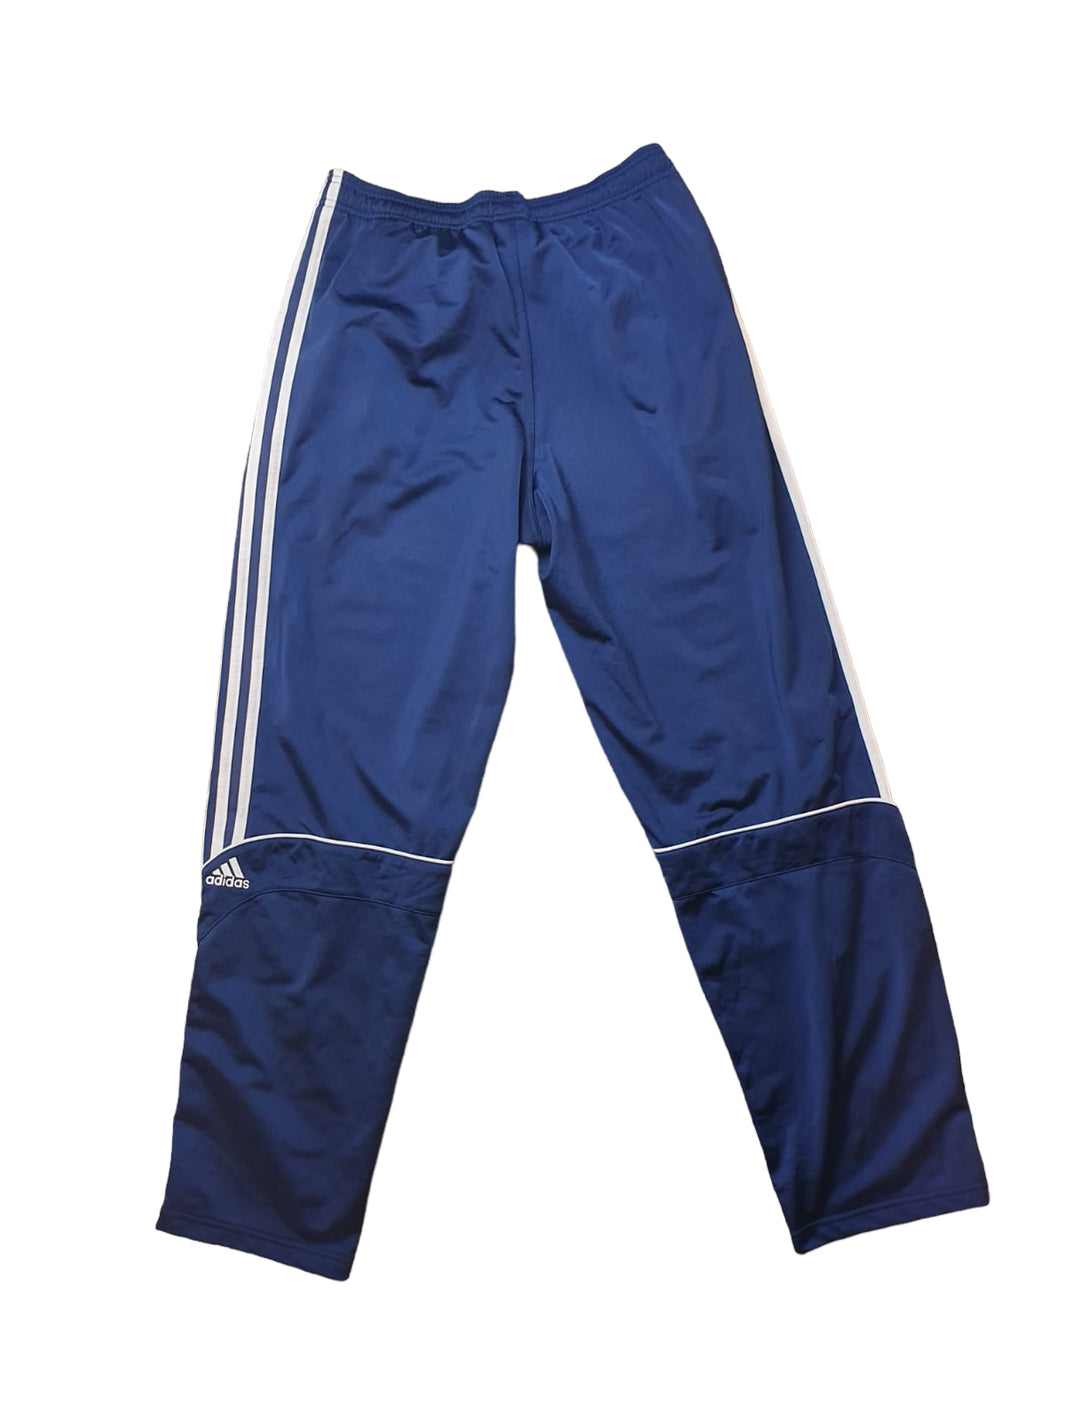 Adidas Track Pants